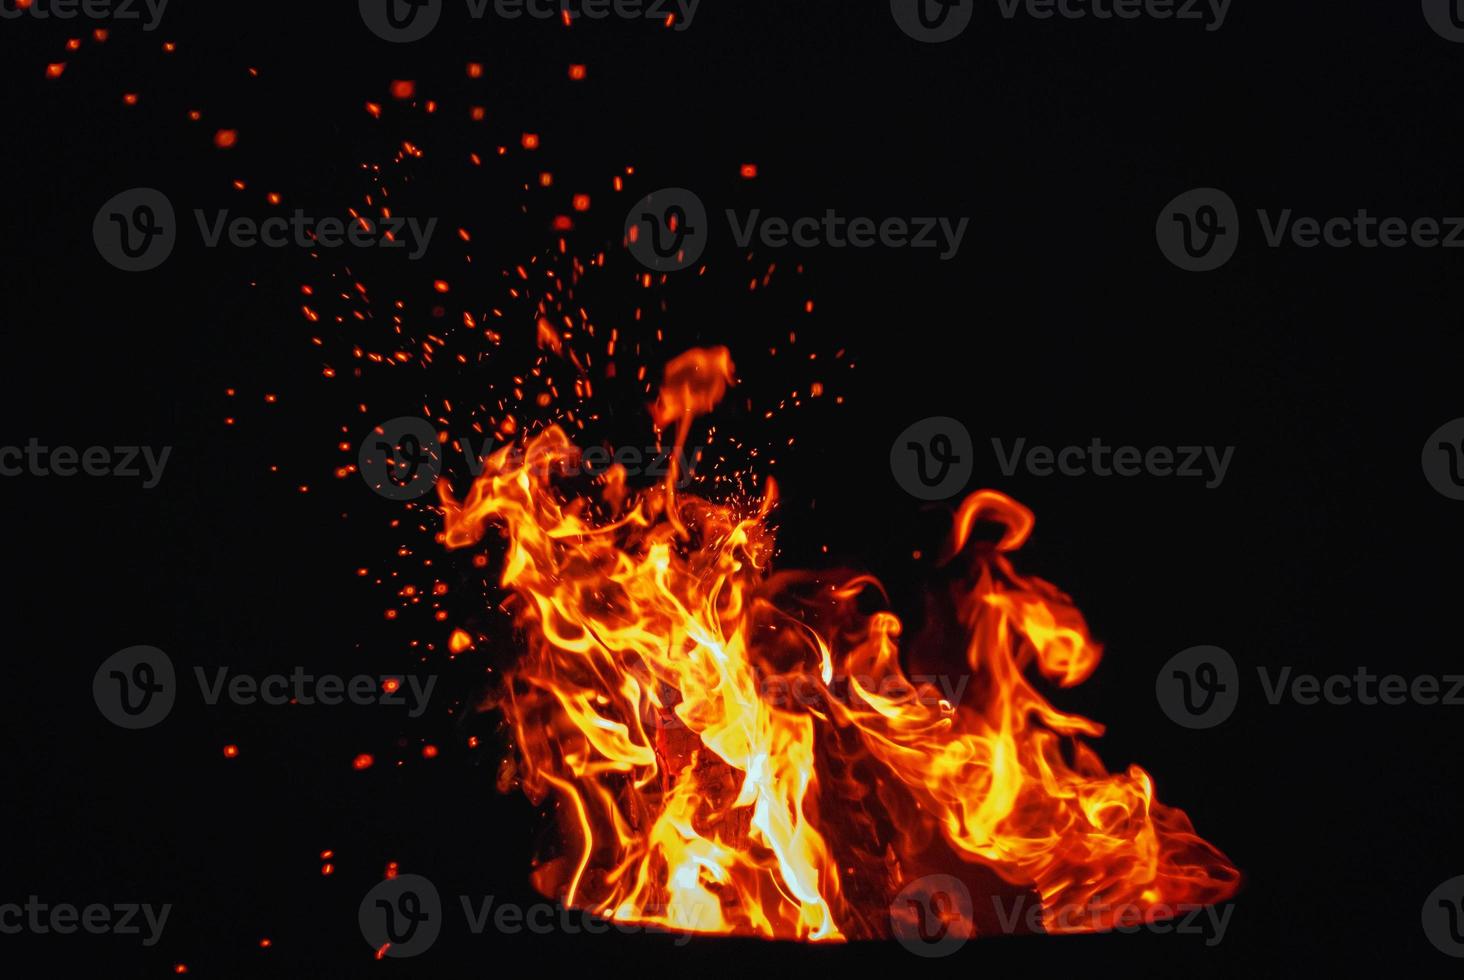 kampvuur brandend Bij nacht, vlam en brand schittert, zwart lucht, kopiëren ruimte foto